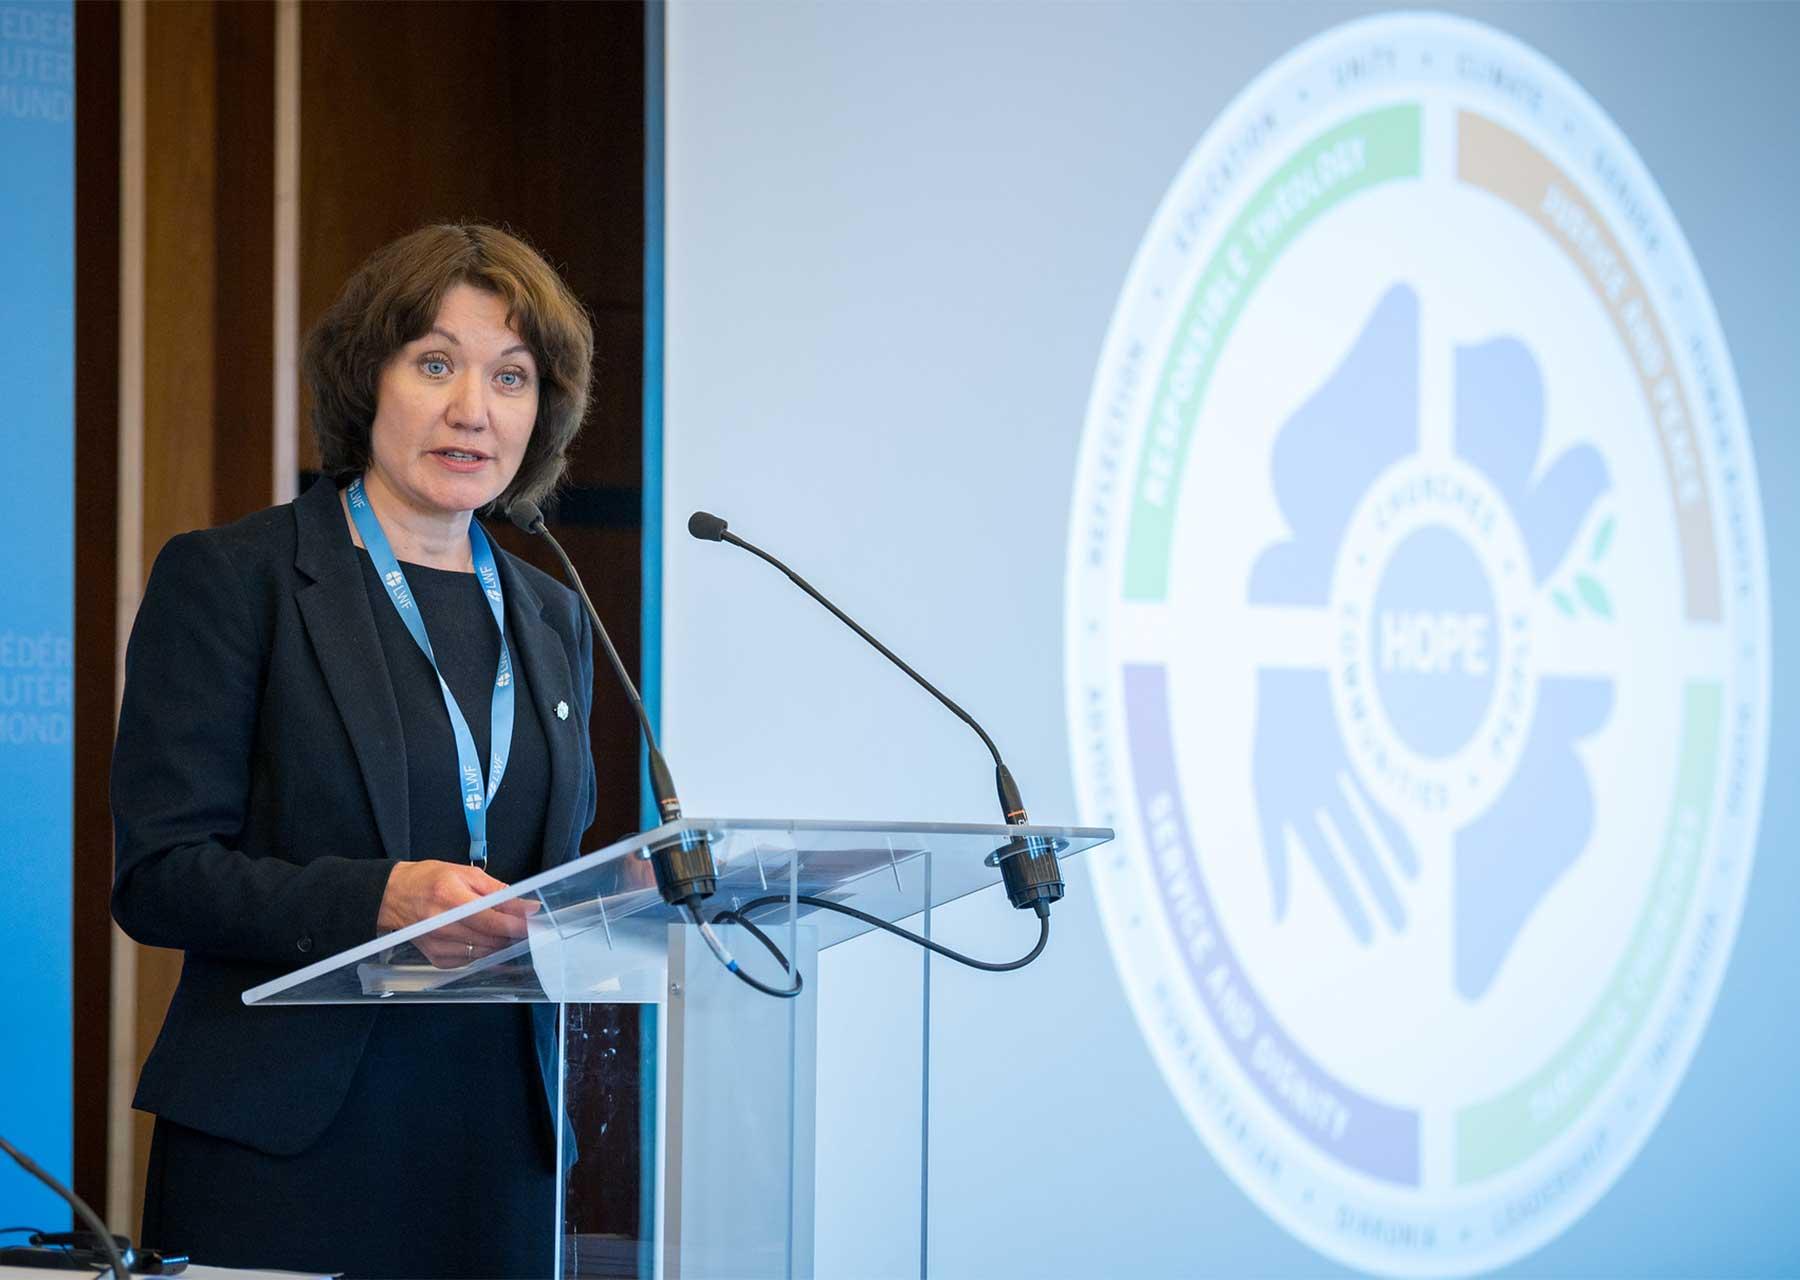 LWF general secretary Rev. Dr Anne Burghardt presents the new LWF strategy for the period 2025-2031. Photo: LWF/Albin Hillert